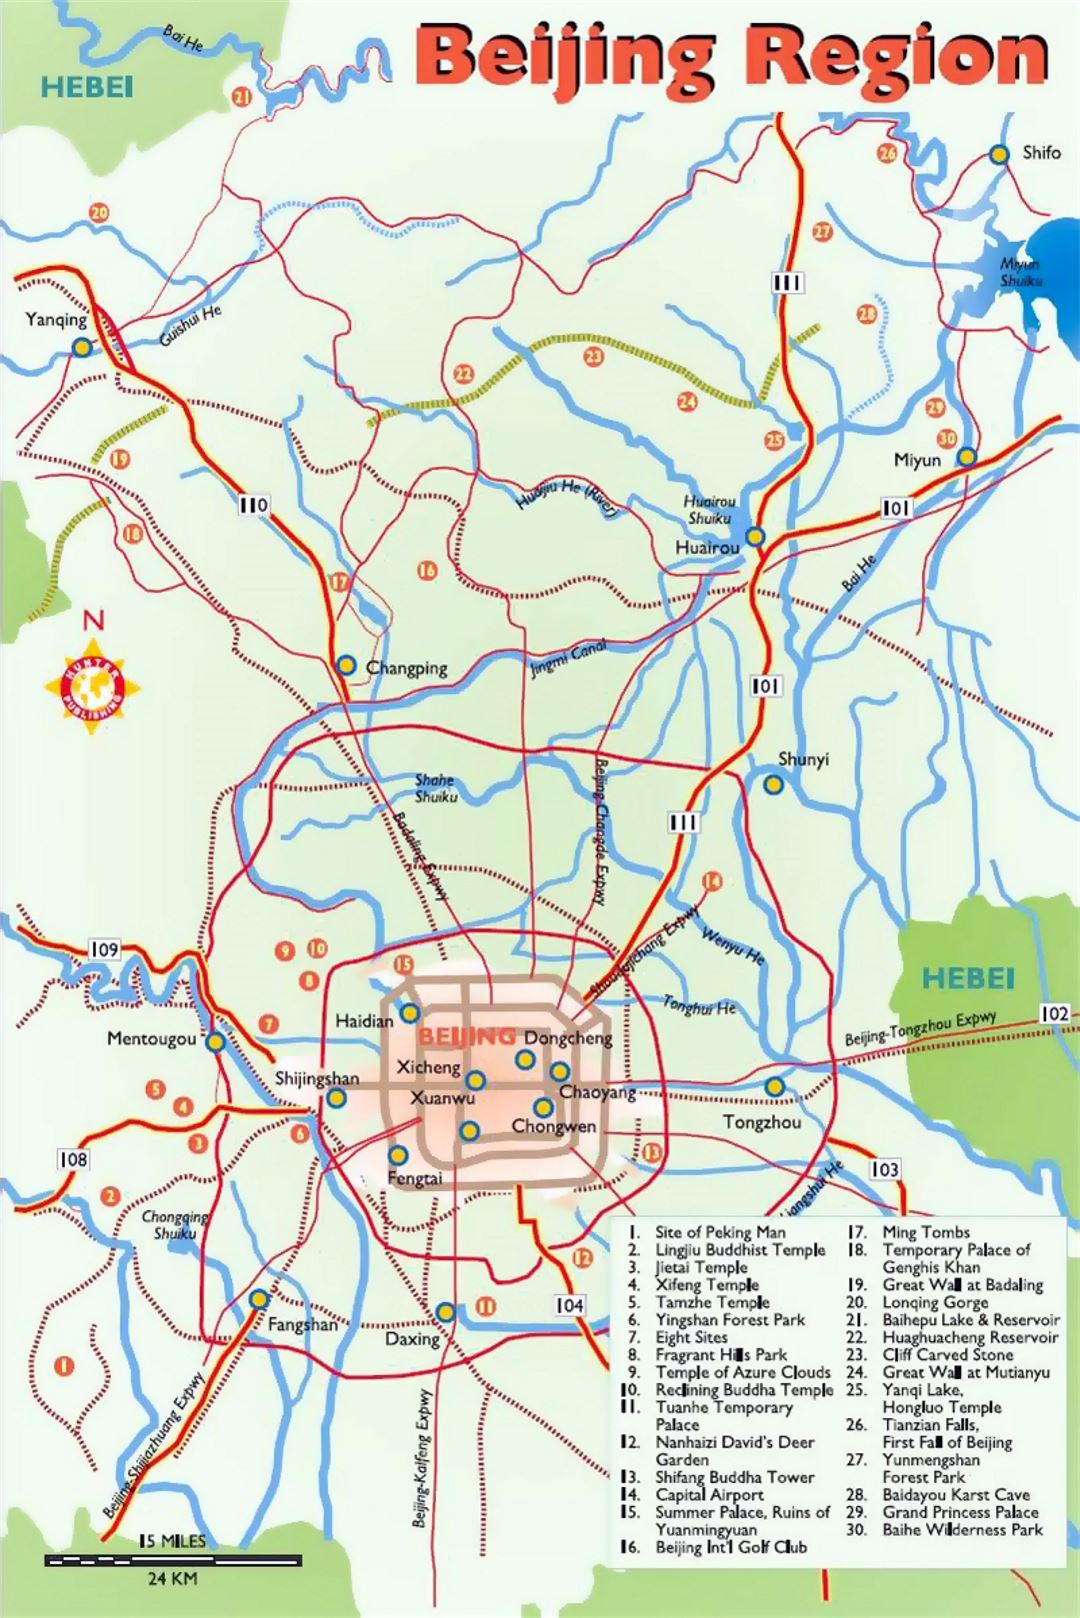 Detailed map of Beijing region